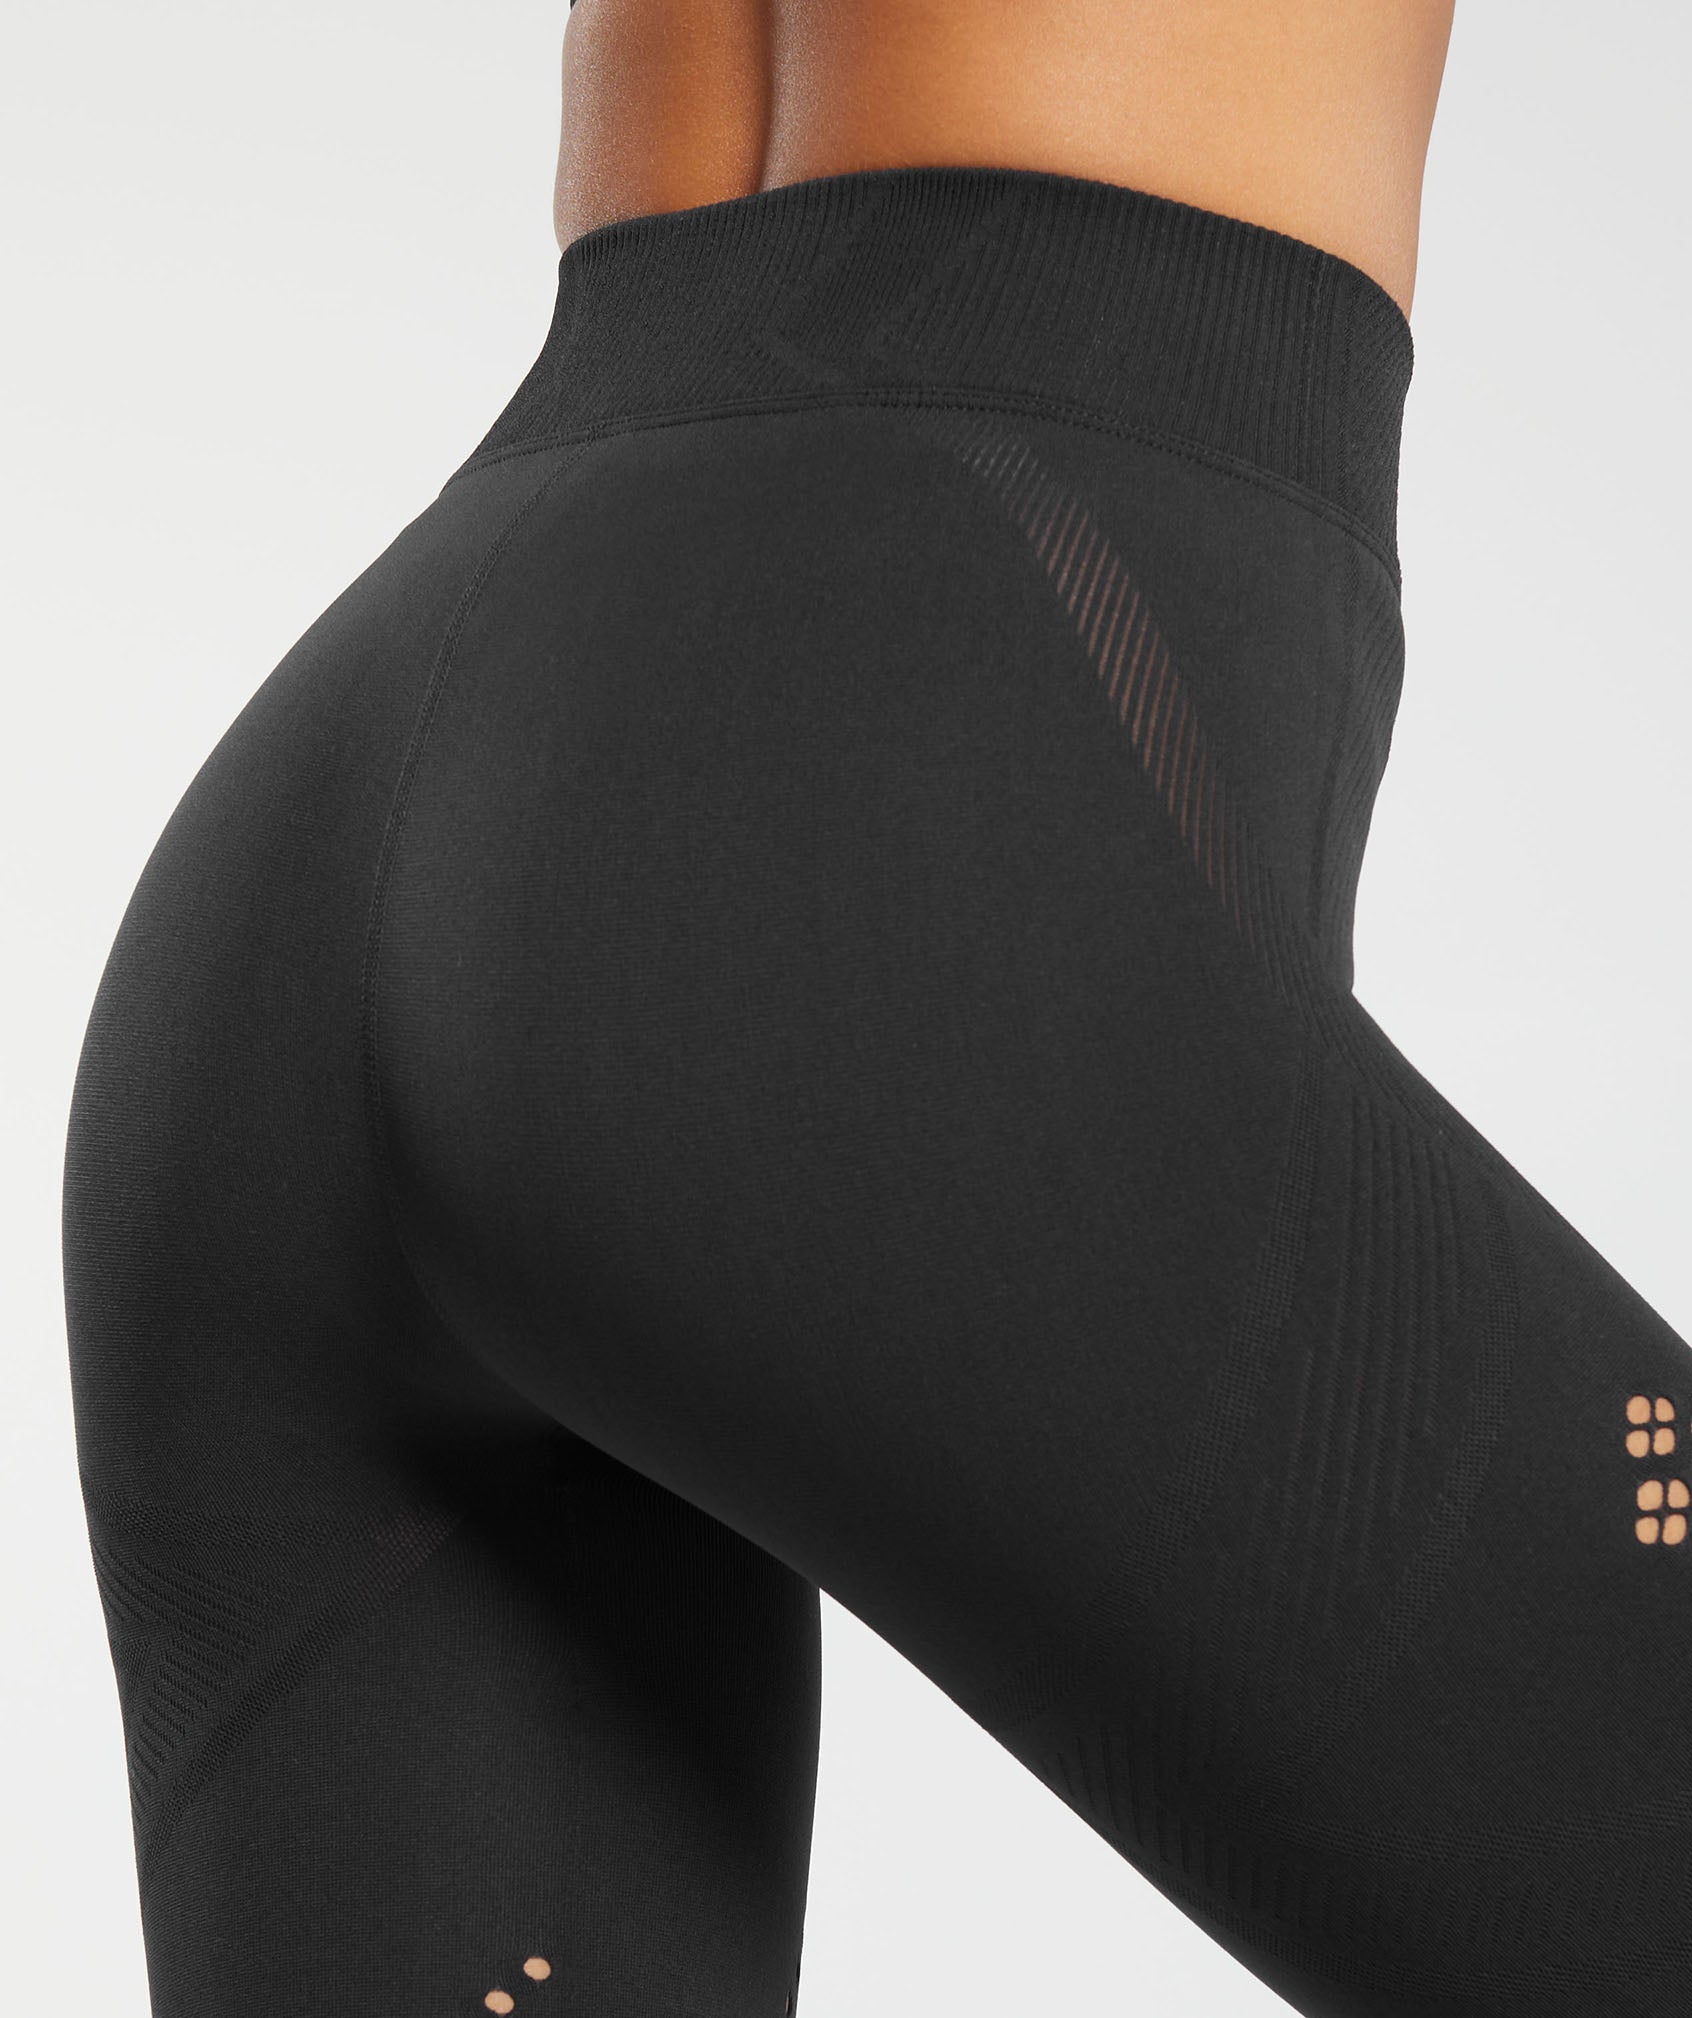 gymshark black gradient seamless leggings size XS, Women's Fashion